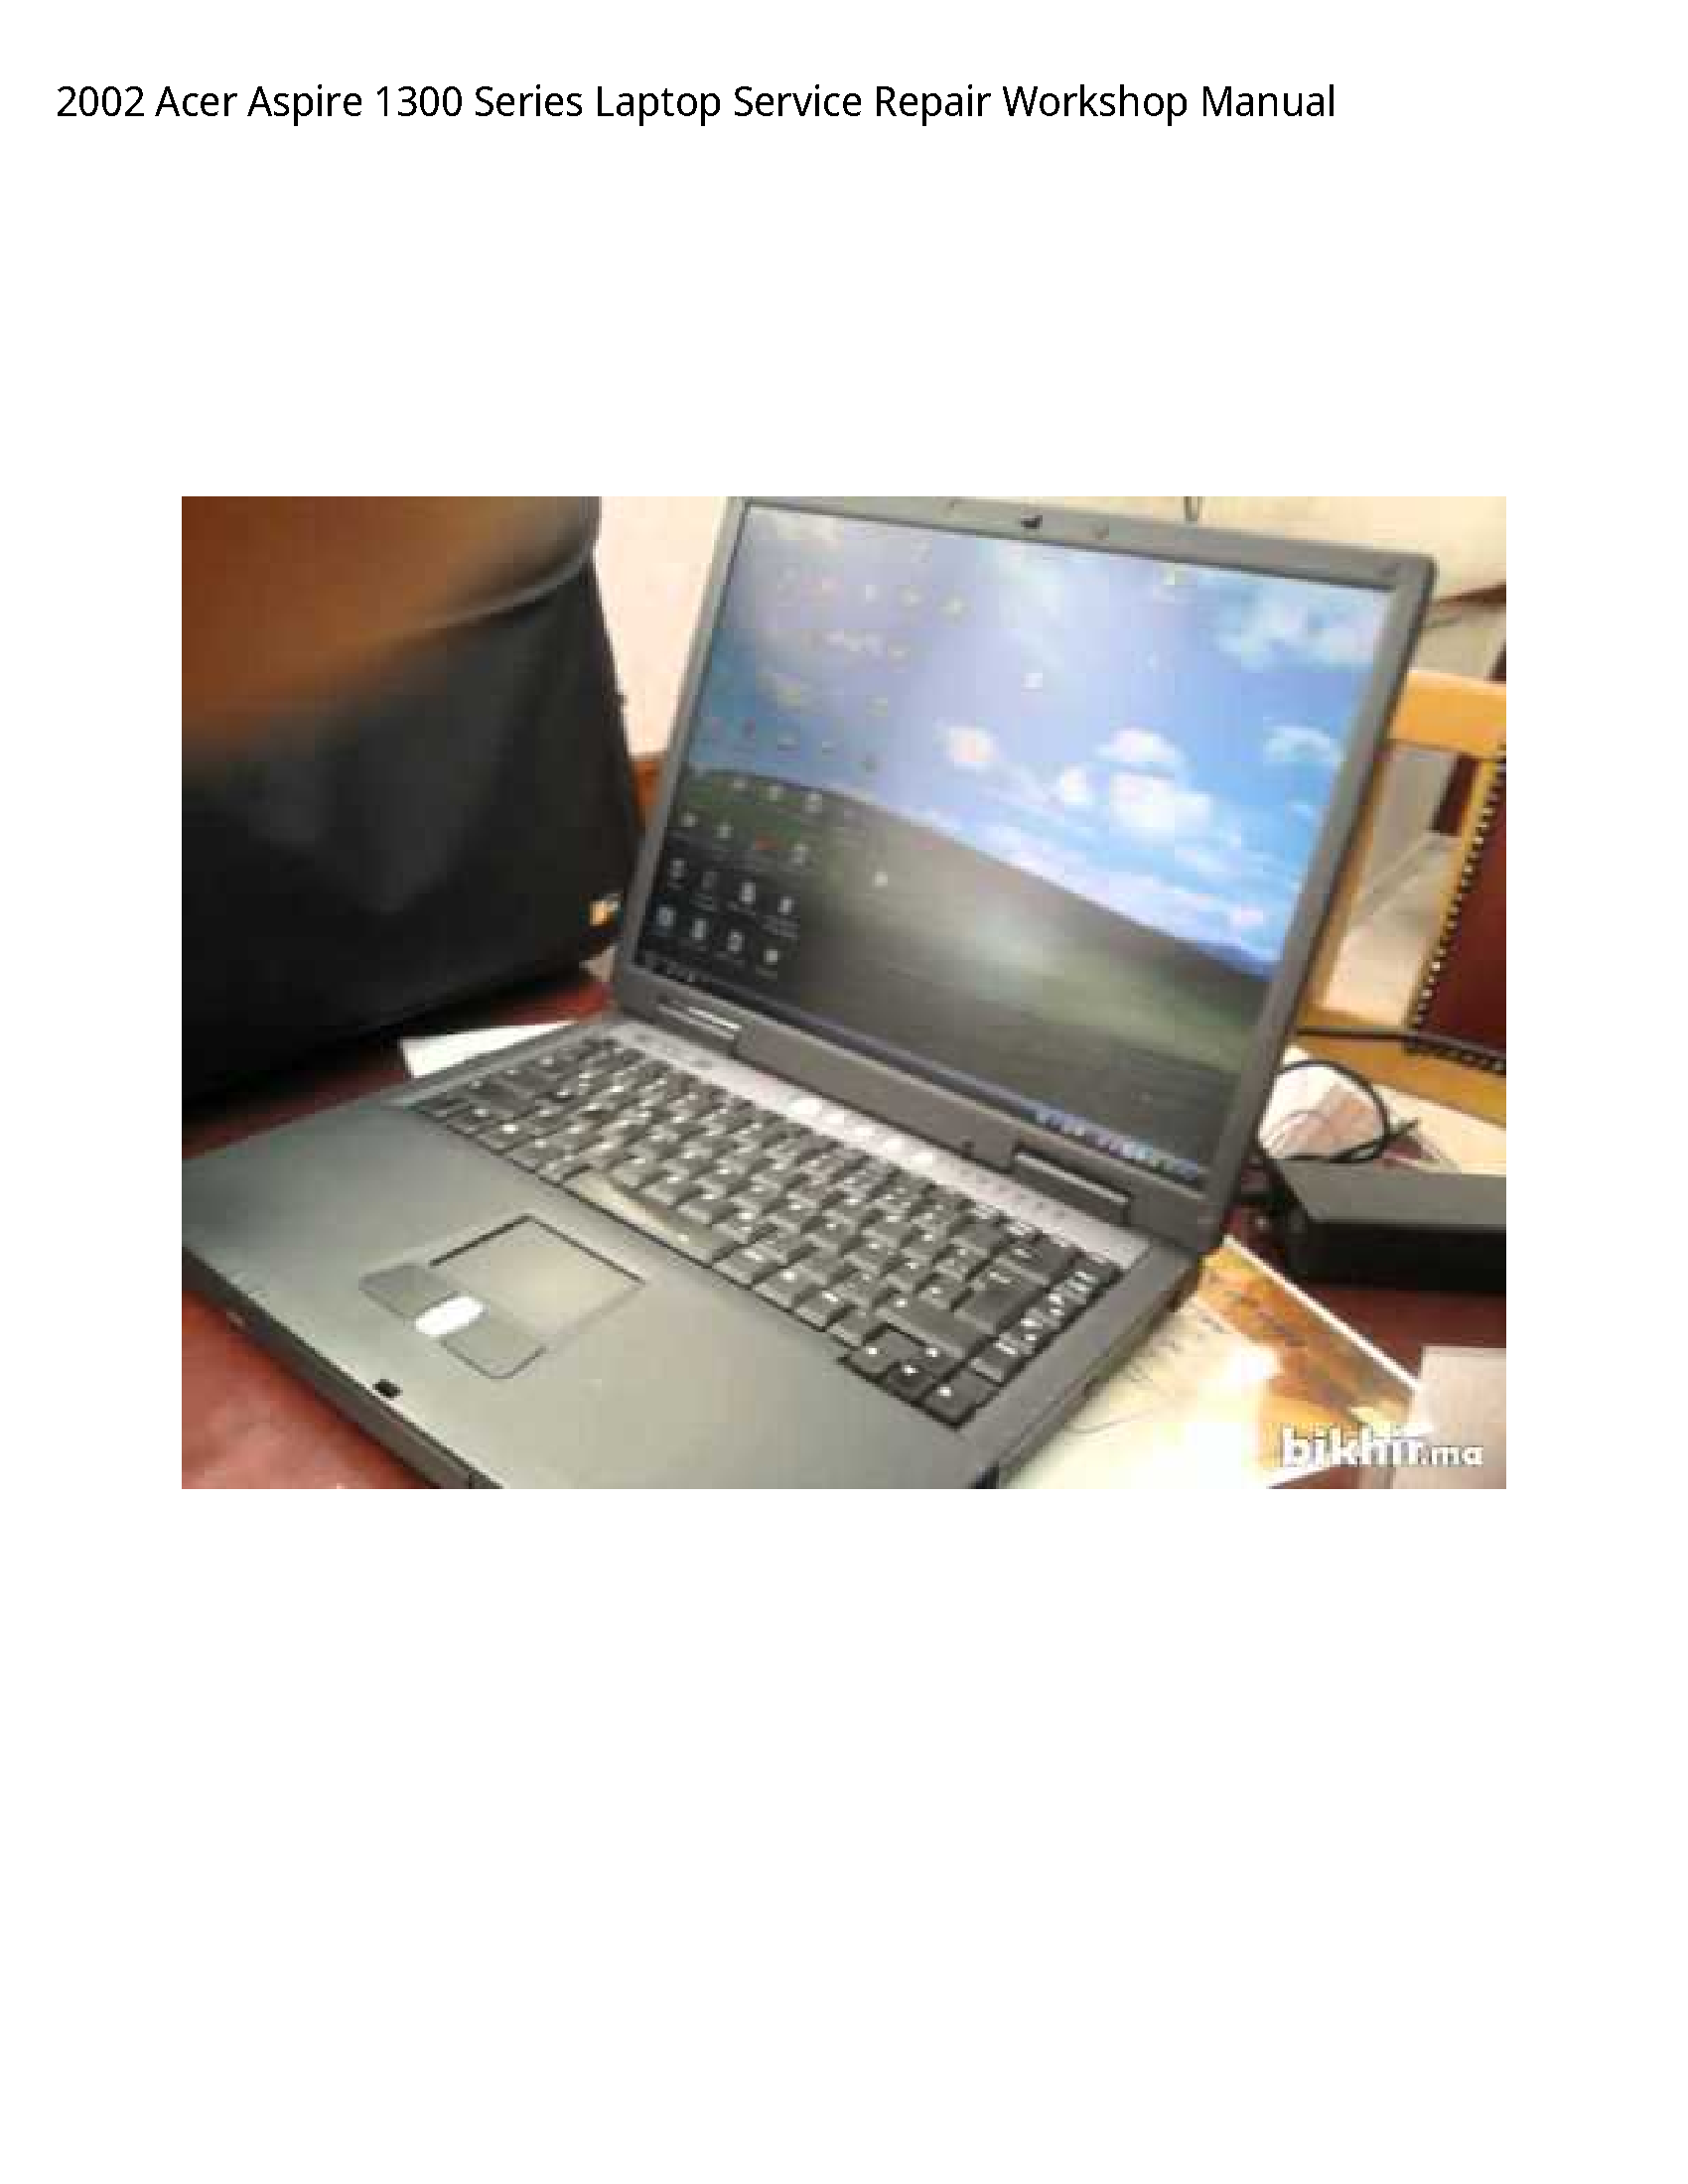 Acer 1300 Aspire Series Laptop manual